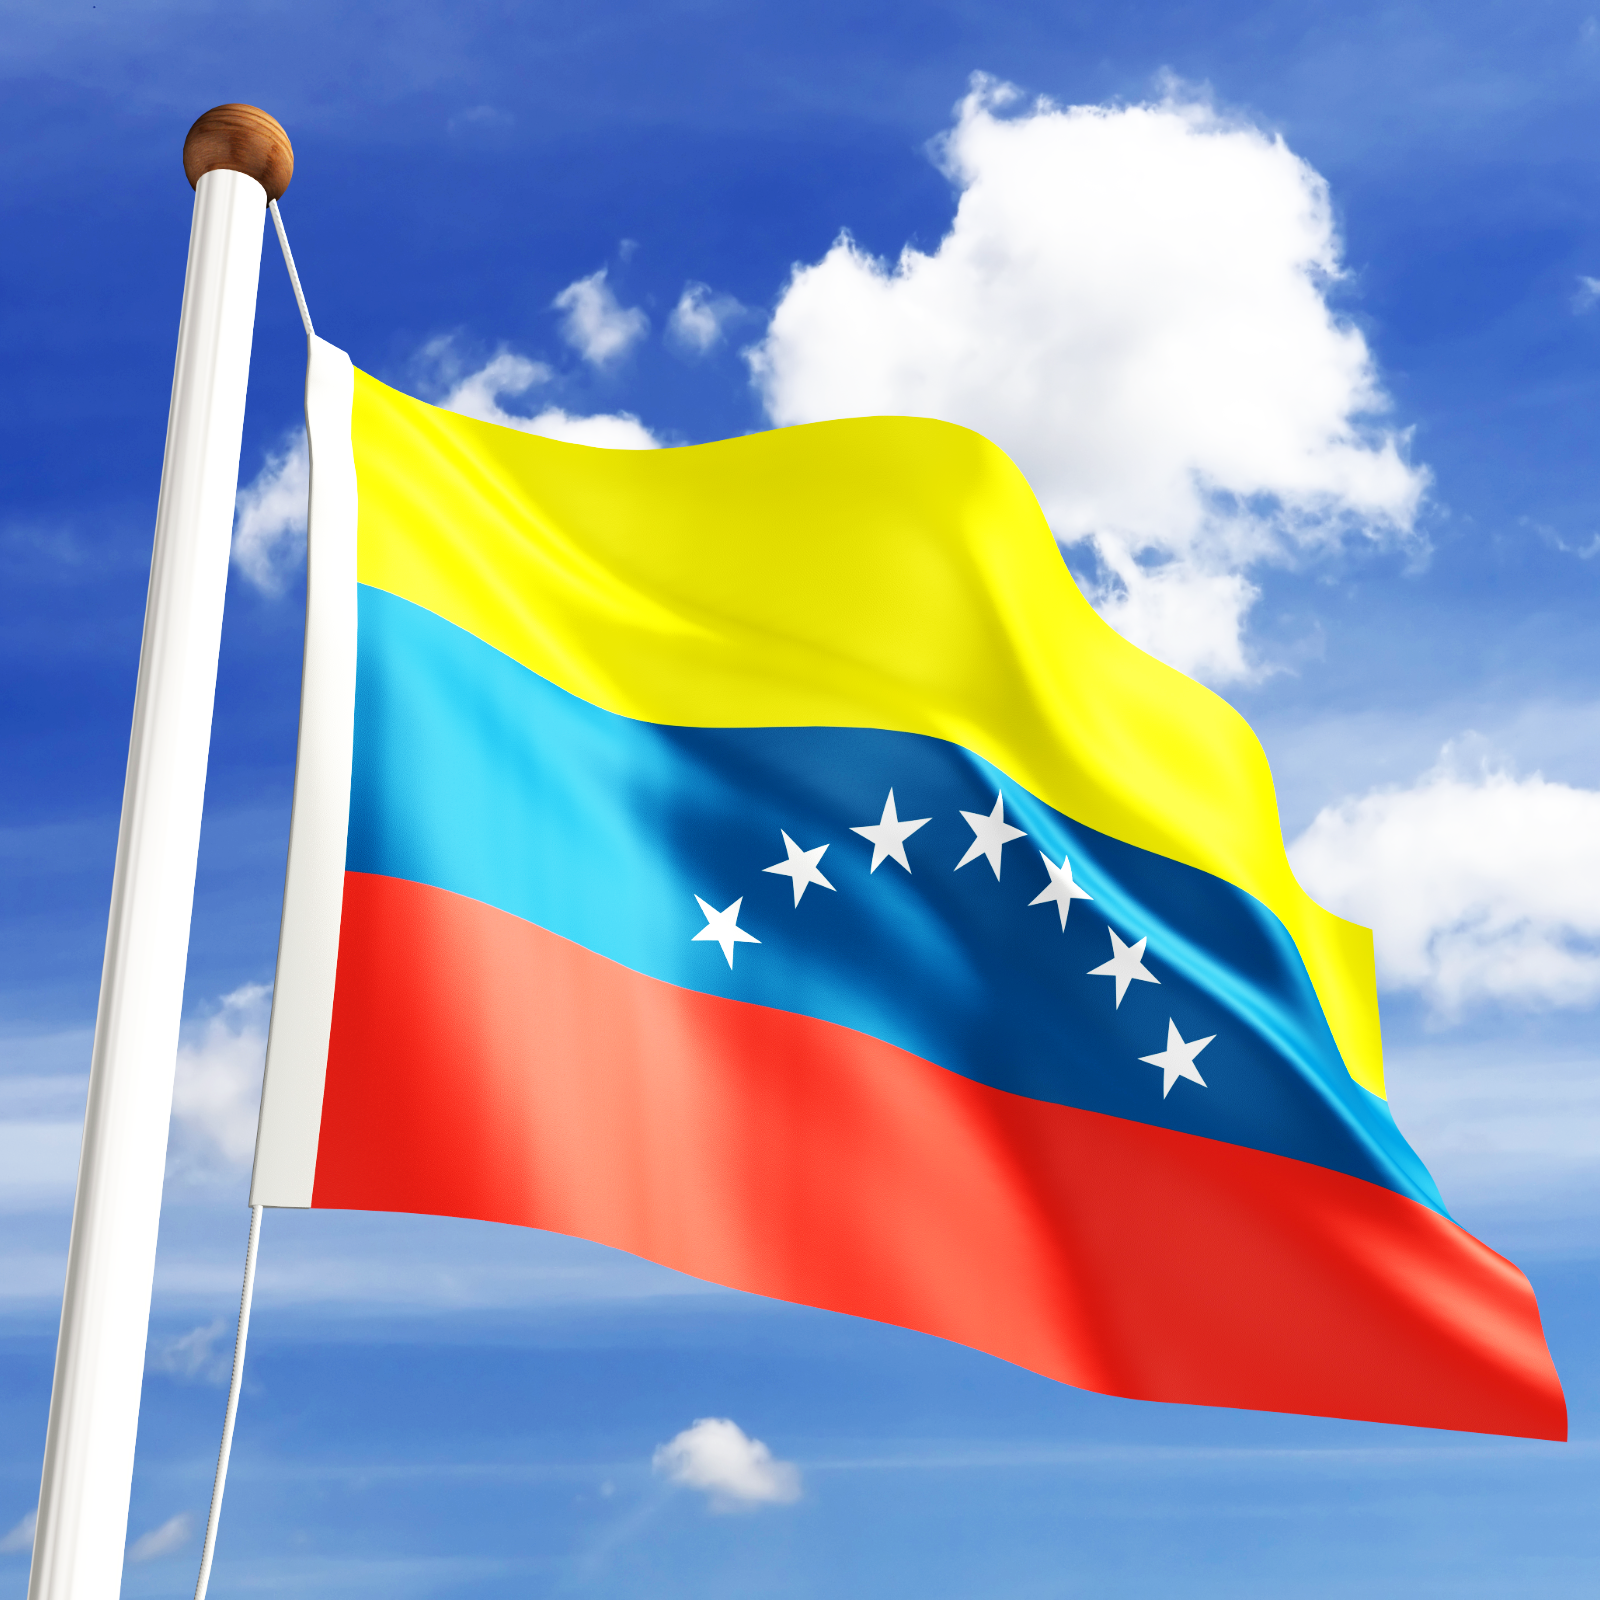 Venezuela Begins Monitoring Bank Accounts for Crypto Transactions